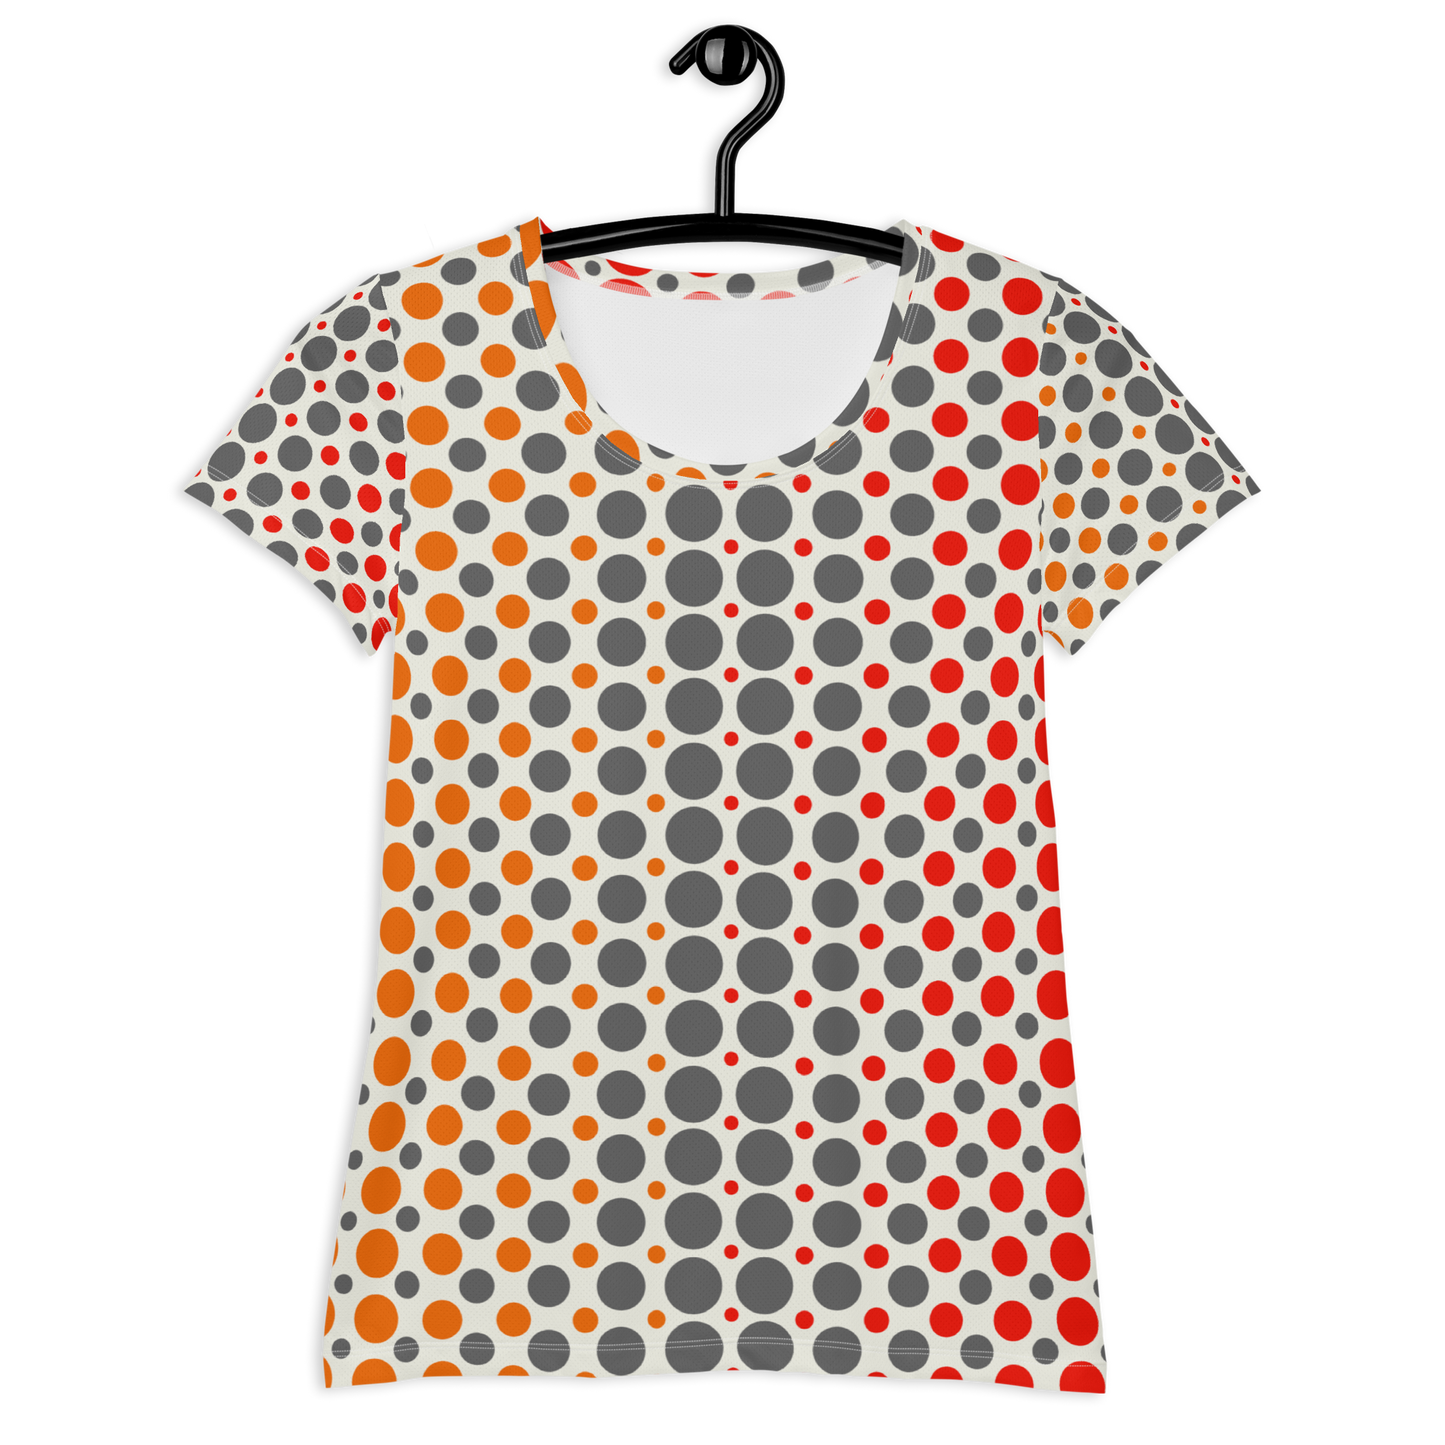 Ombre Dots Athletic T-shirts - Orange